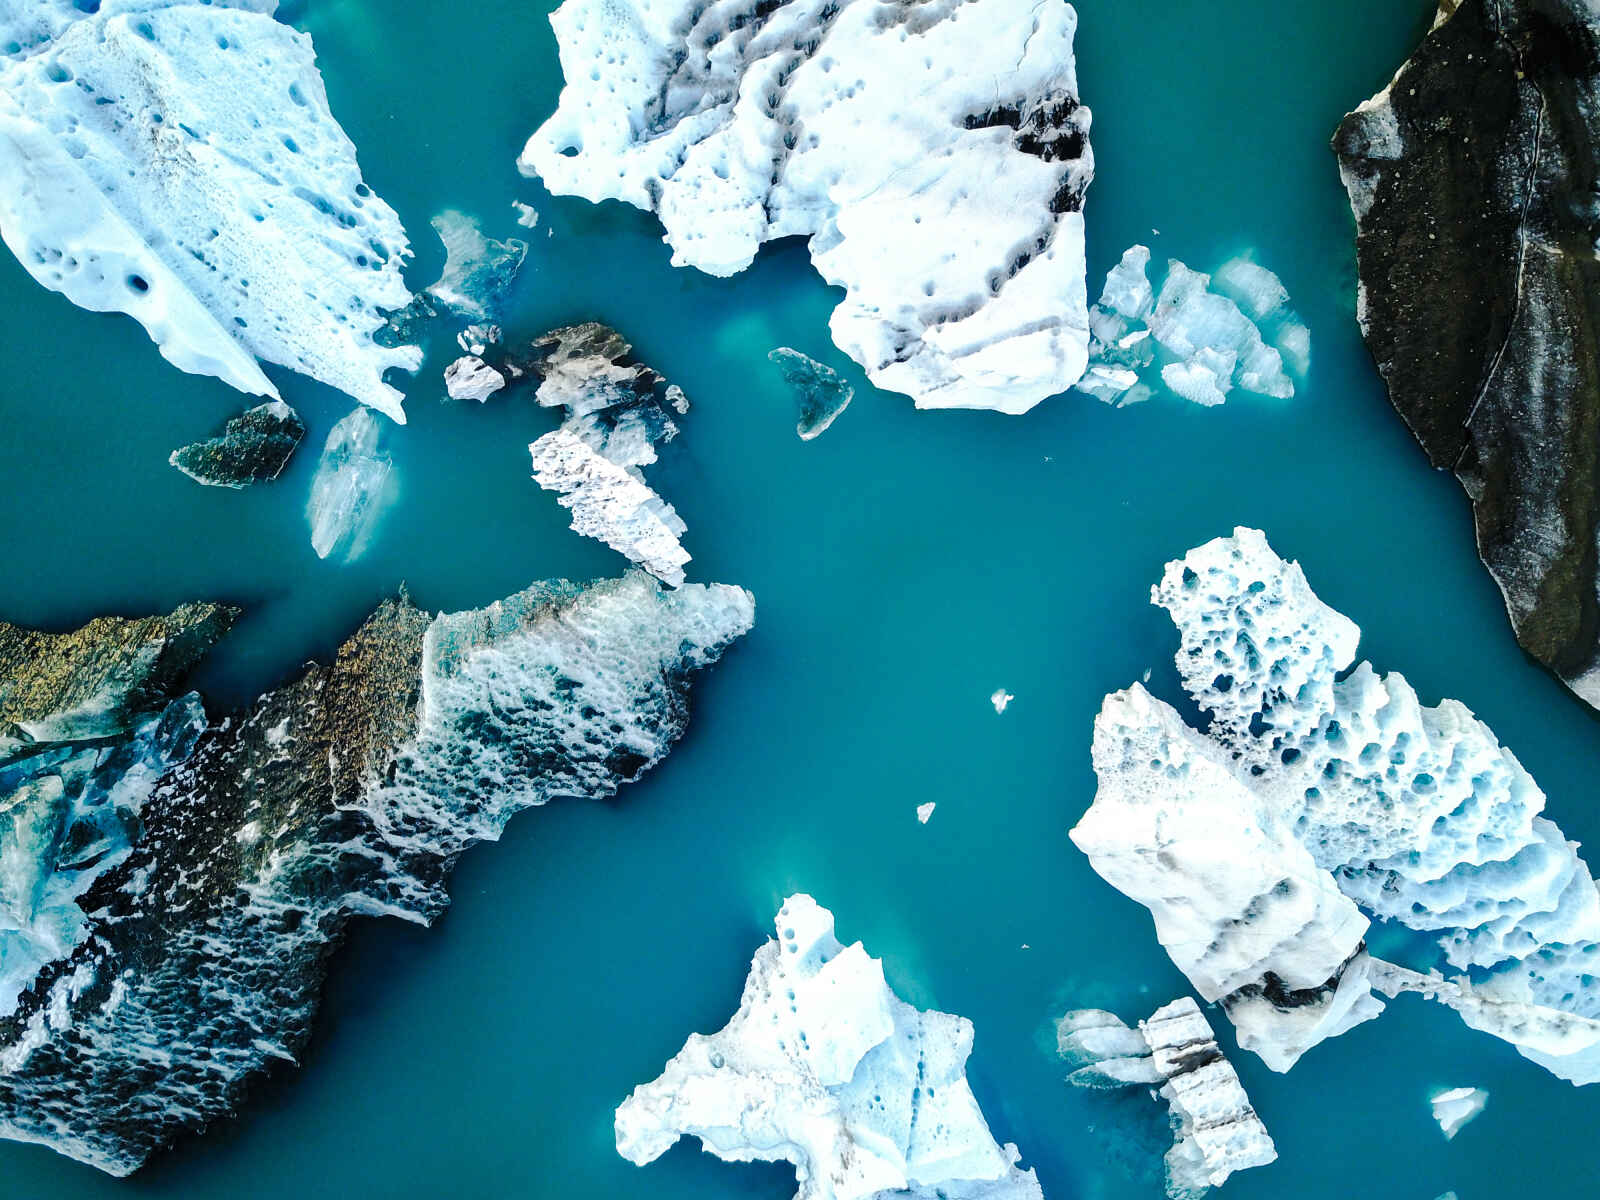 Vue aérienne d'une partie du glacier Jokulsarlon, Islande